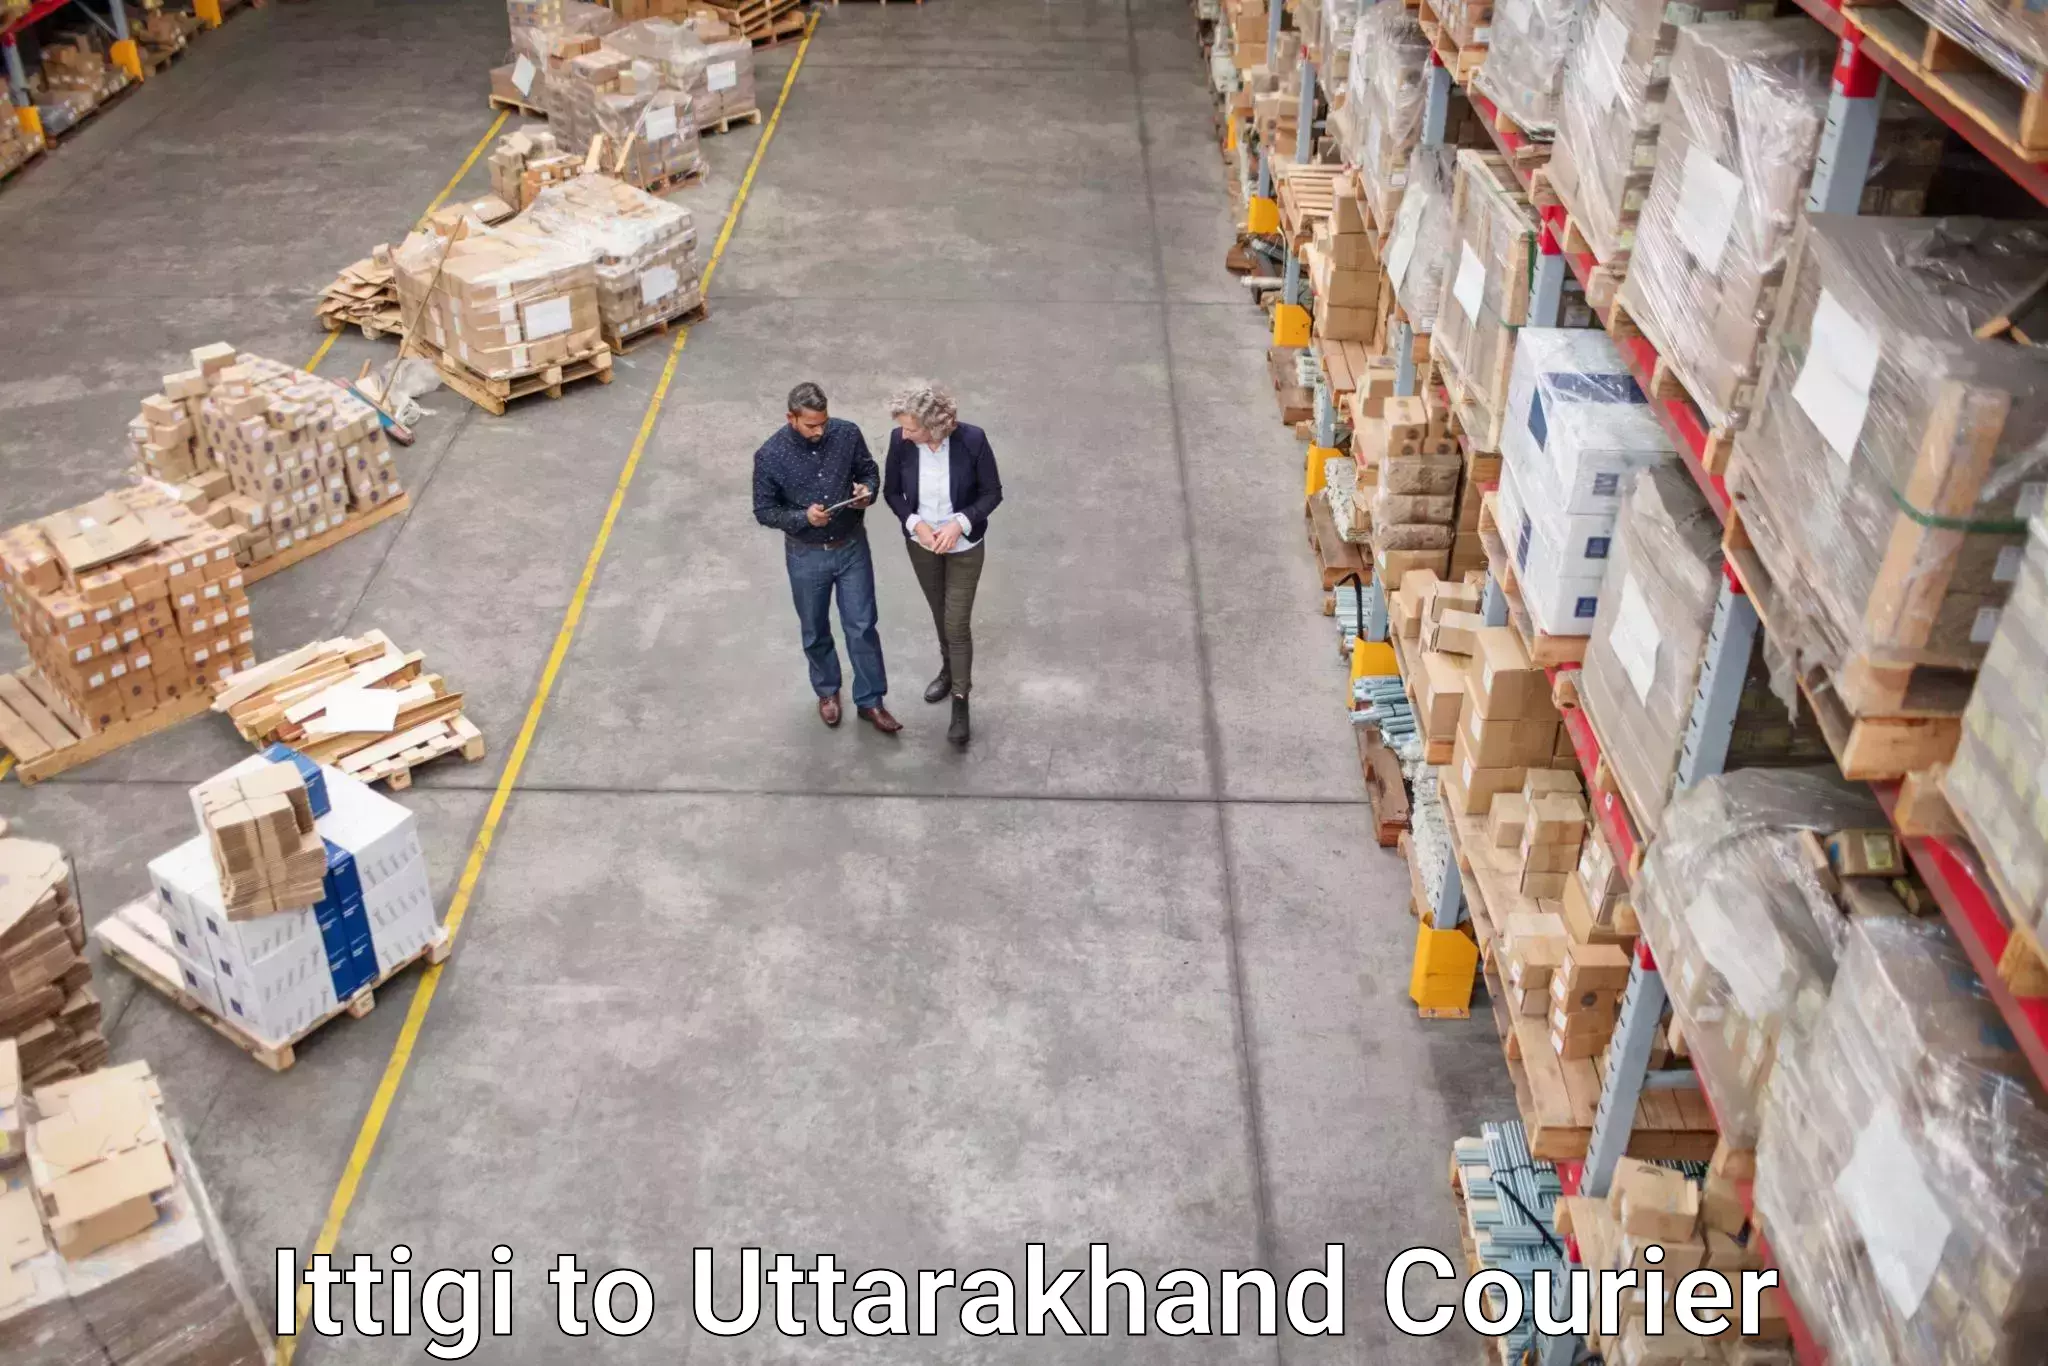 Courier service comparison Ittigi to Uttarkashi